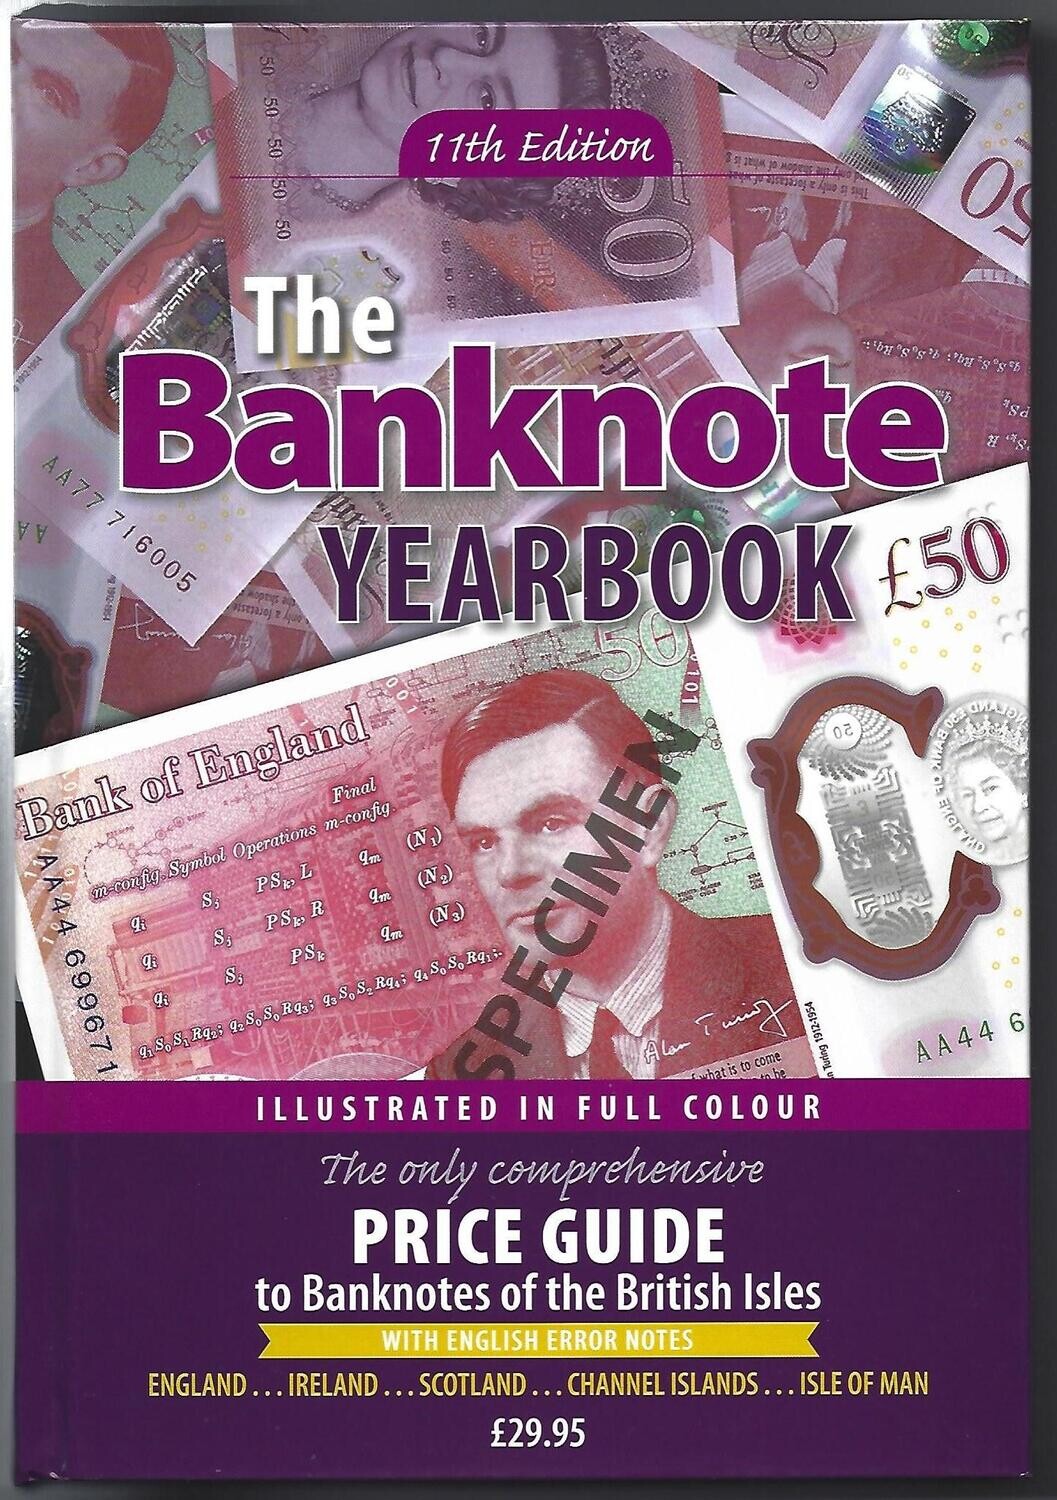 British; "The Banknote Yearbook."